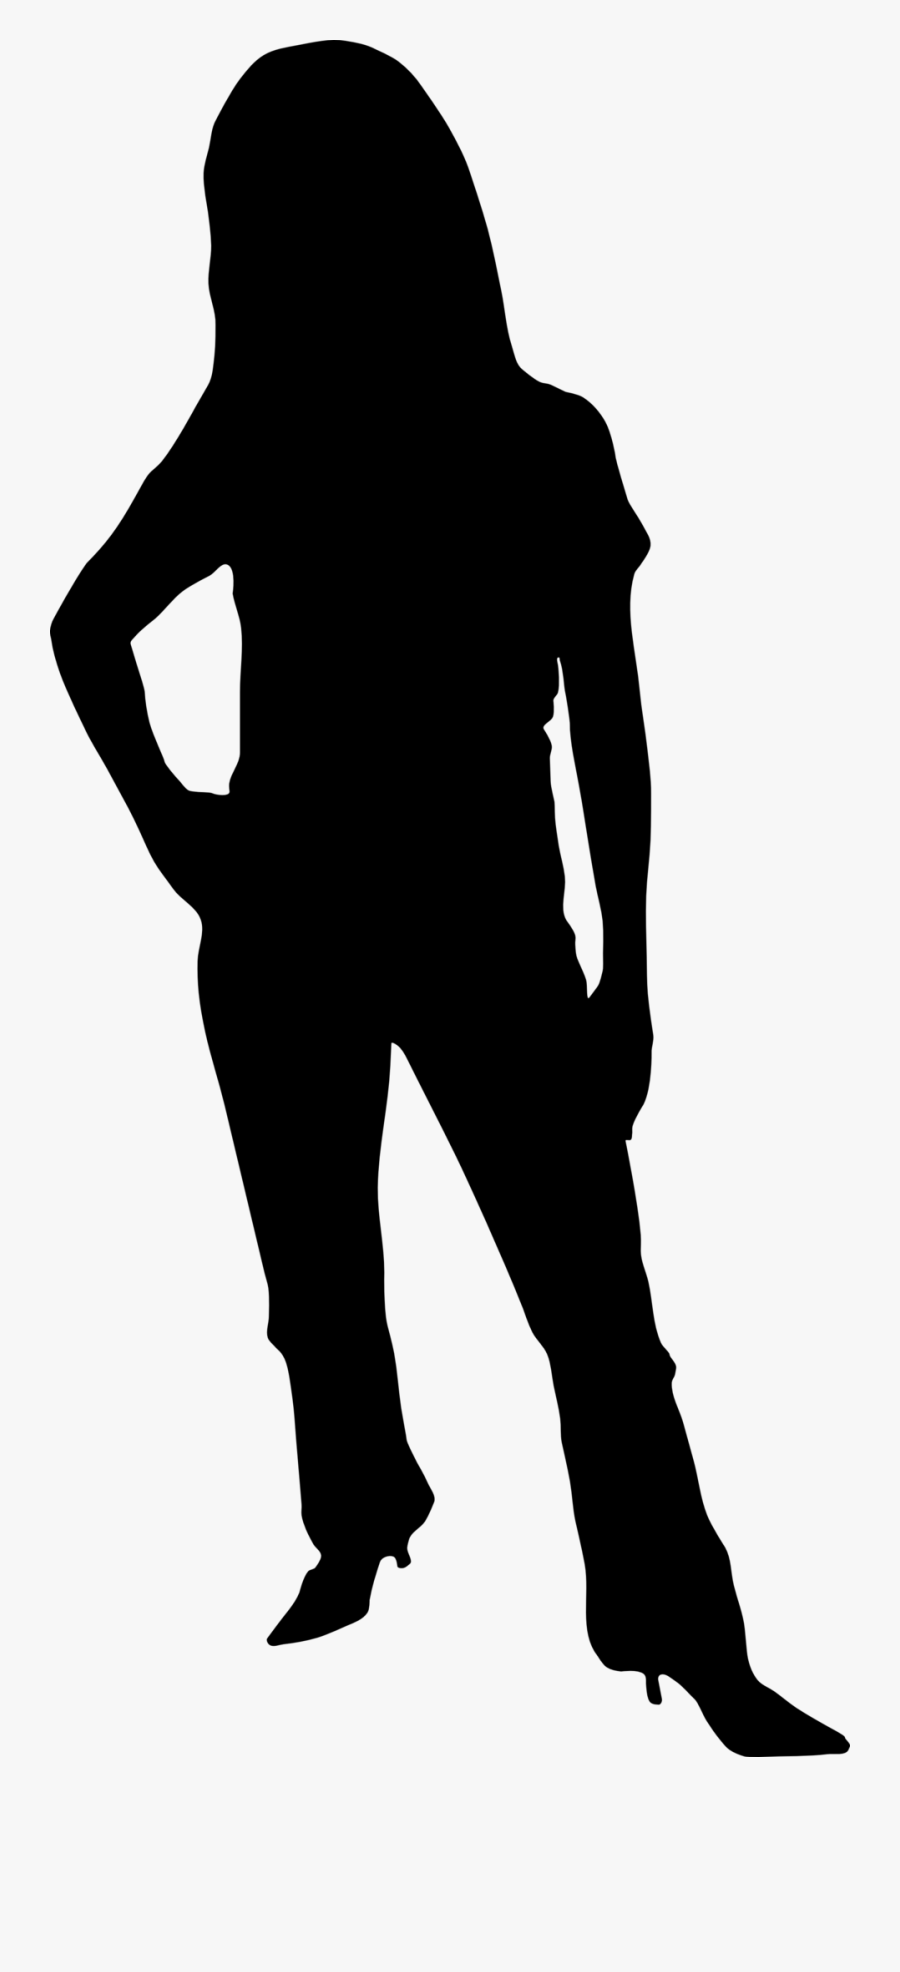 Person - Clipart - Silhouette - Transparent Background Person Silhouette Clipart, Transparent Clipart